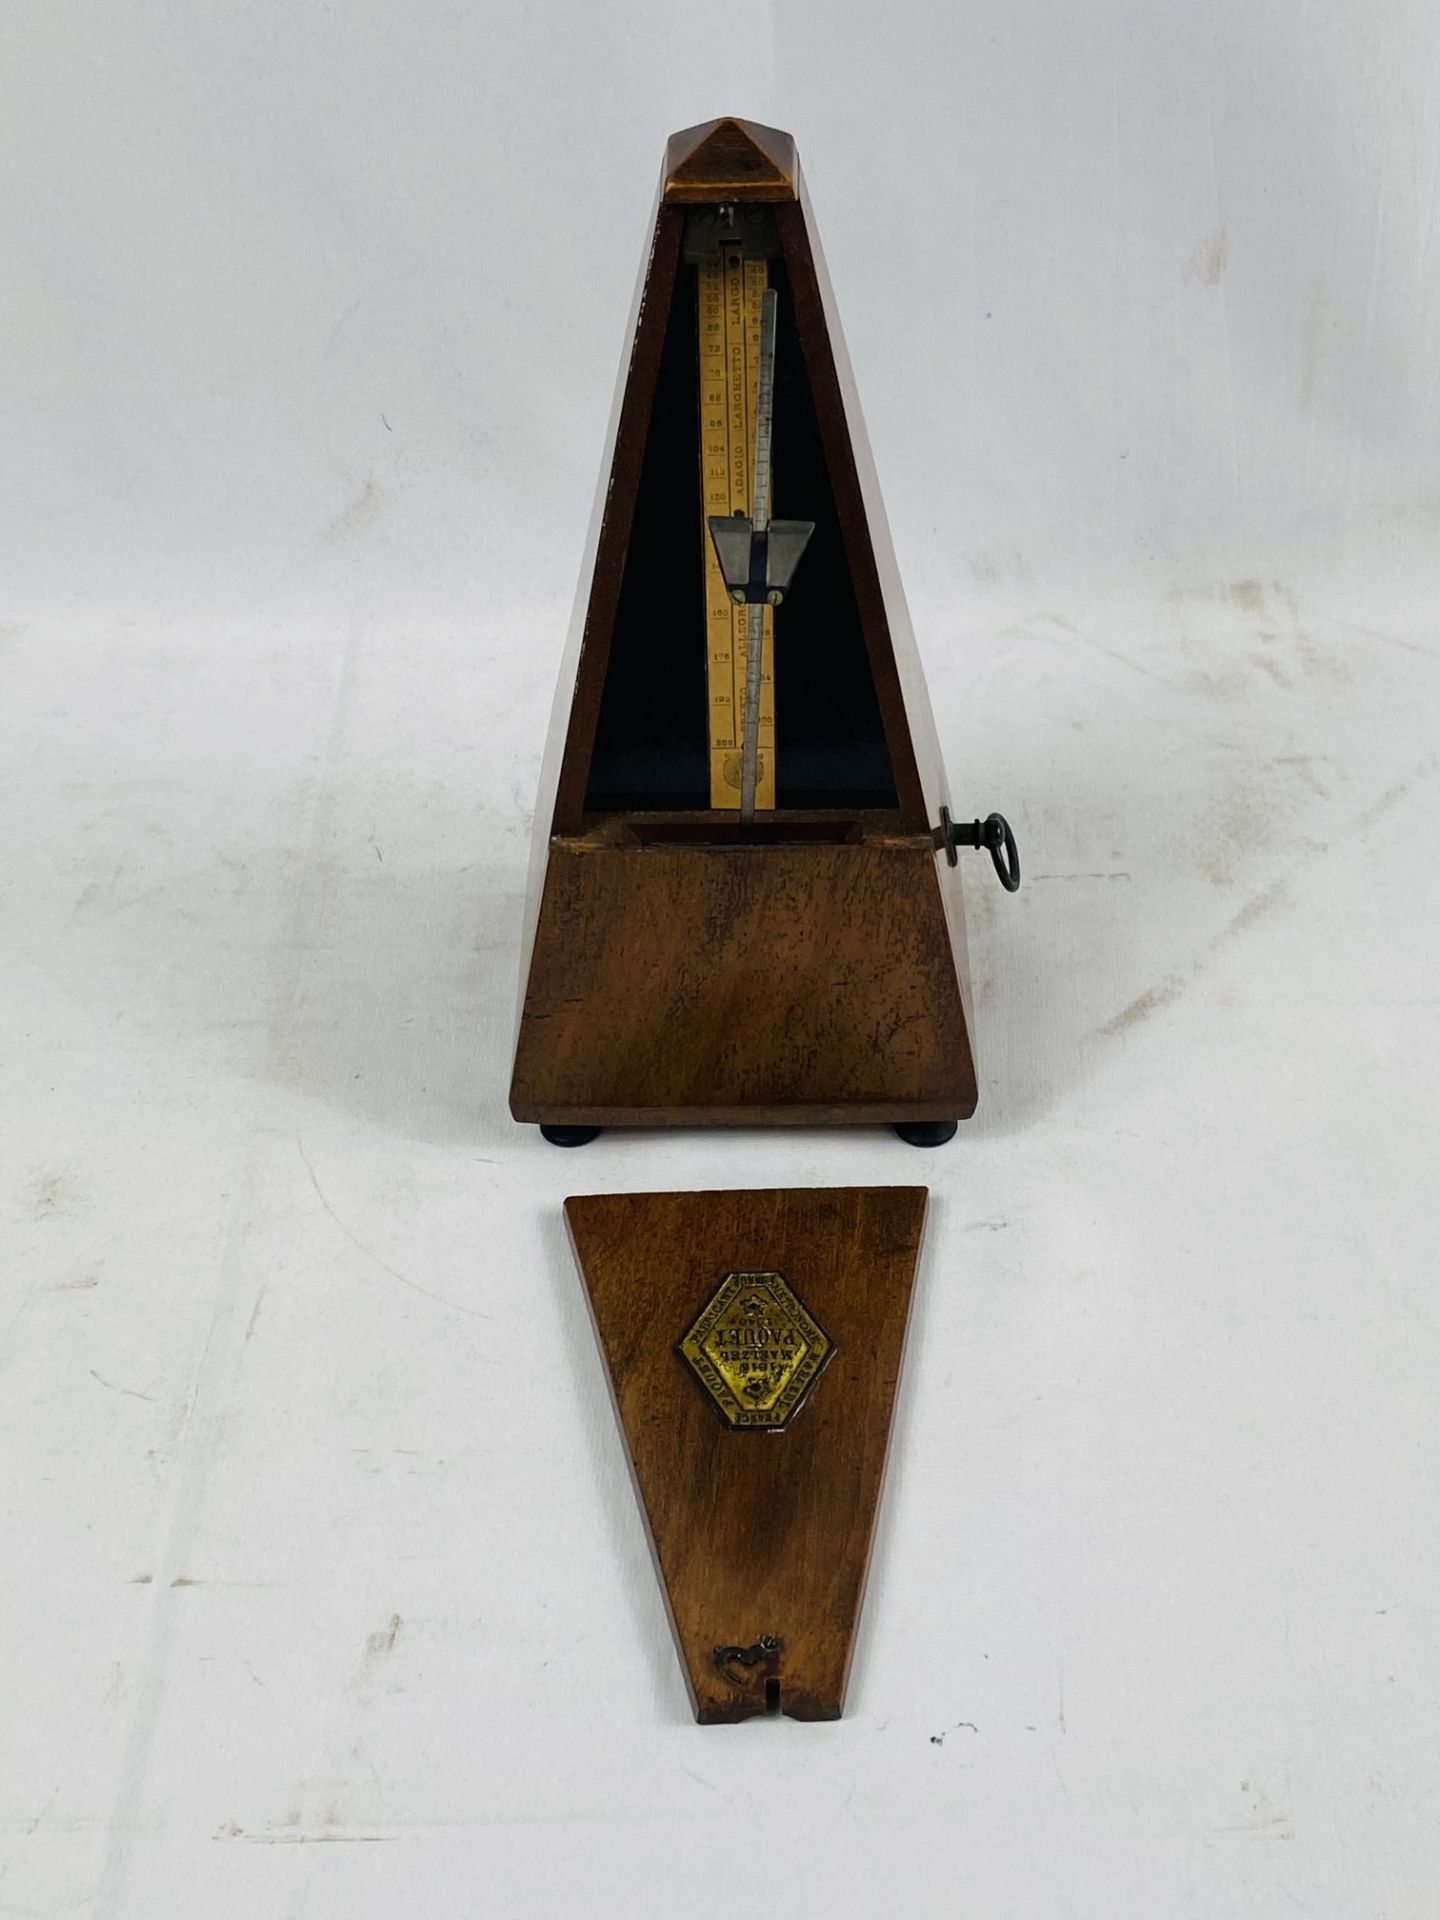 Paquet clockwork metronome - Image 2 of 6